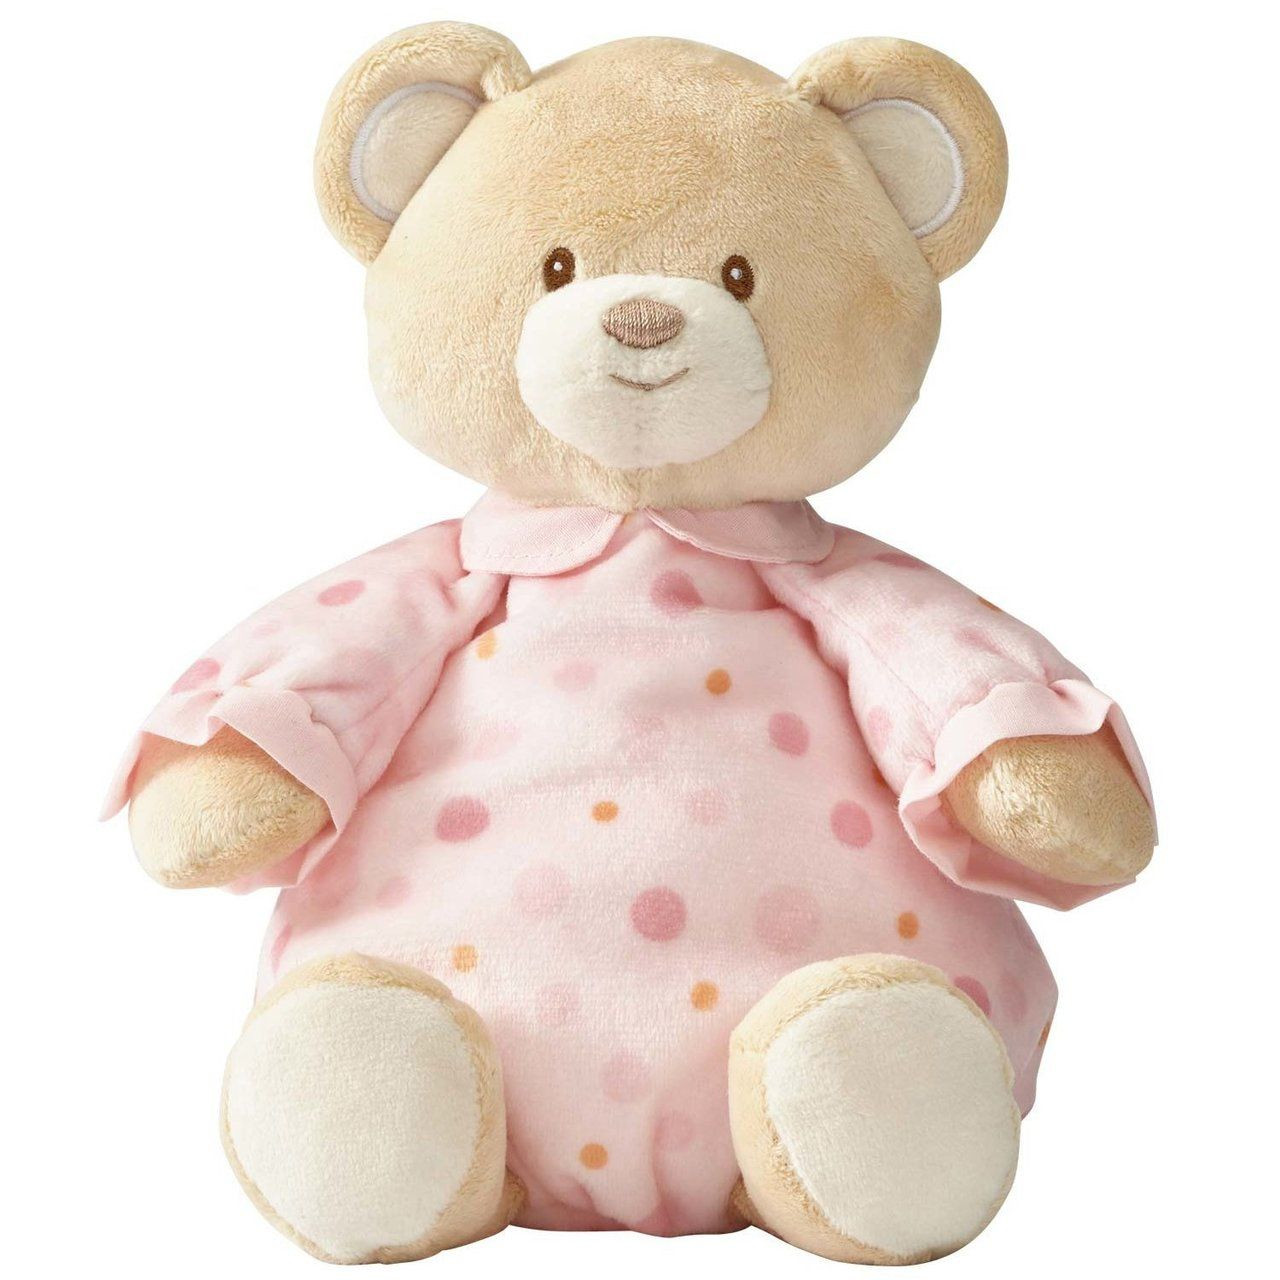 pajama teddy bear